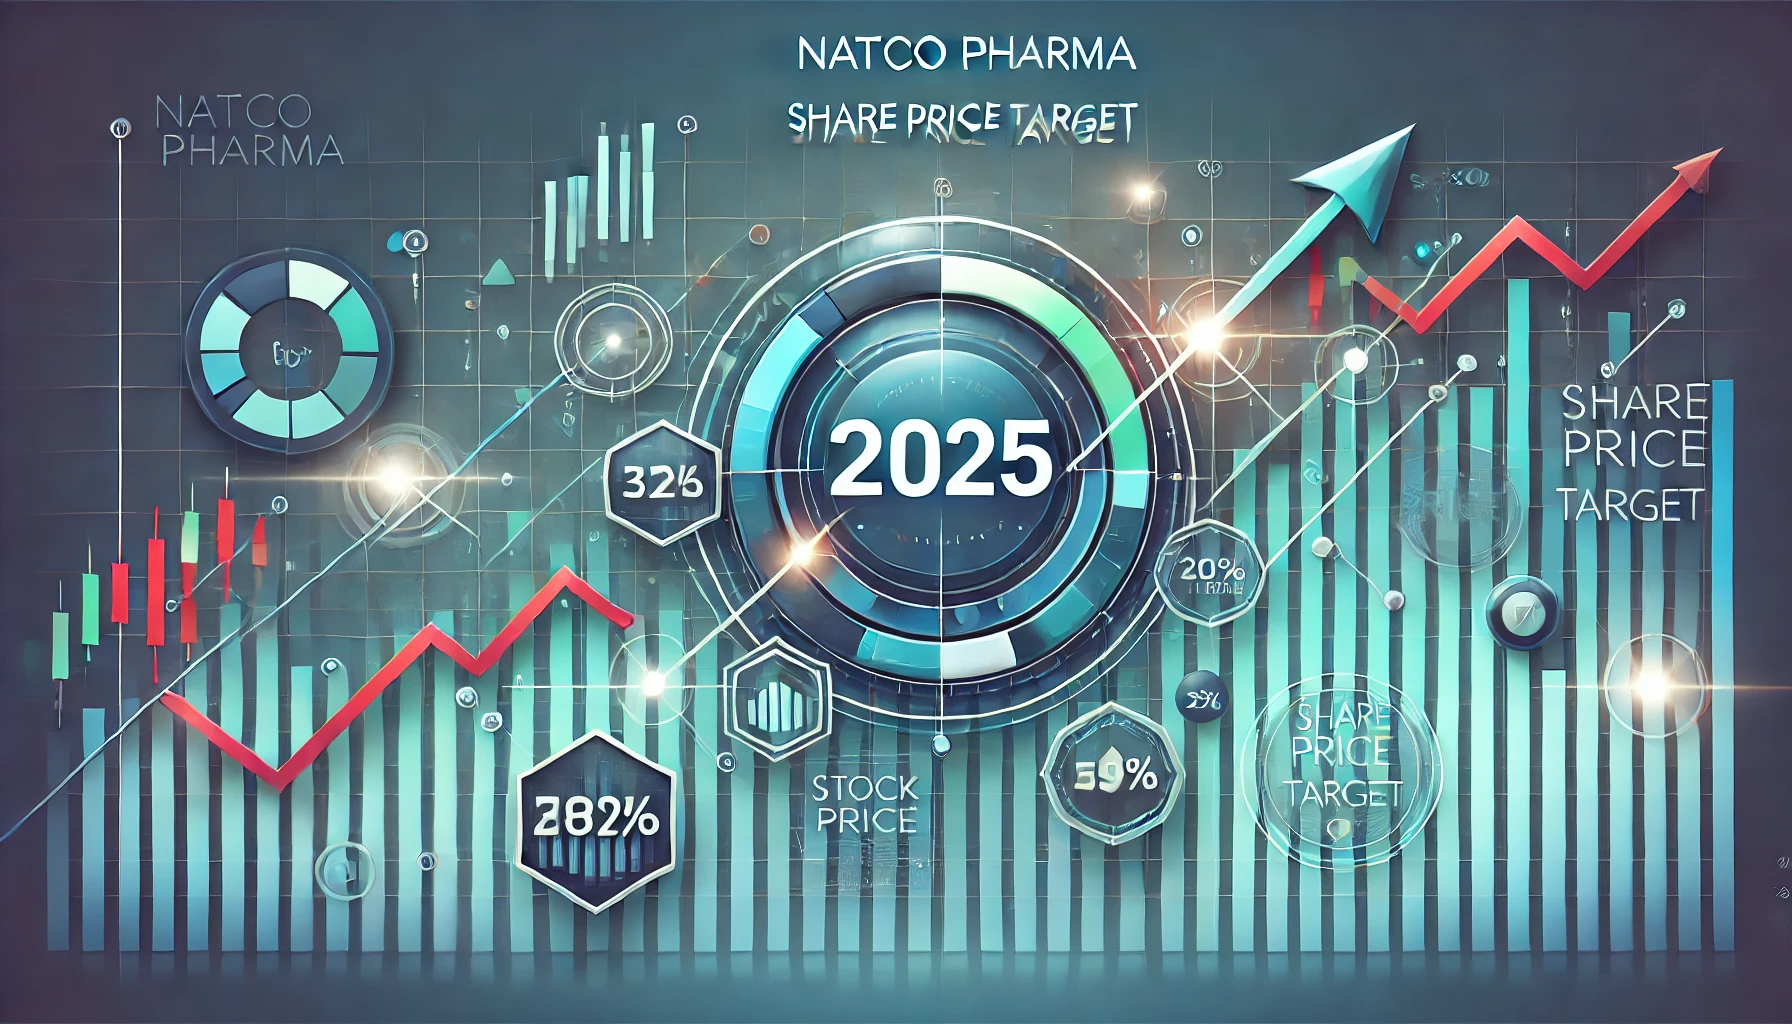 Natco Pharma Share Price Target 2025